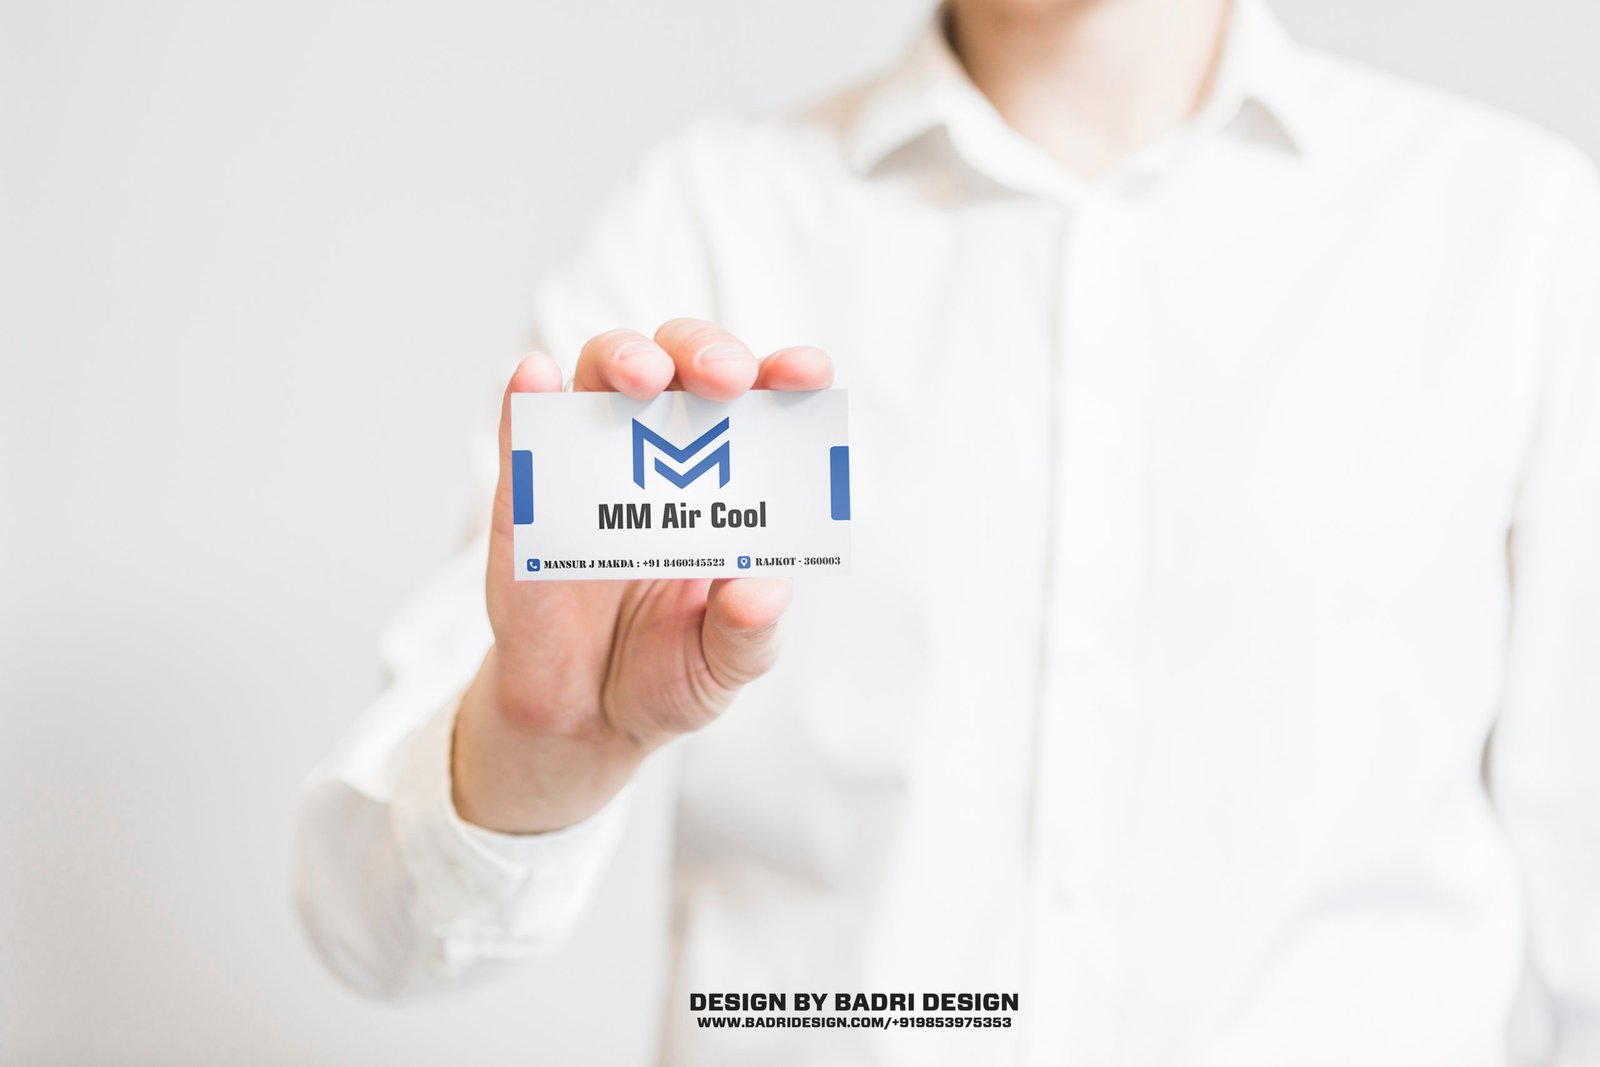 AC services repair company business card design by Badri Design